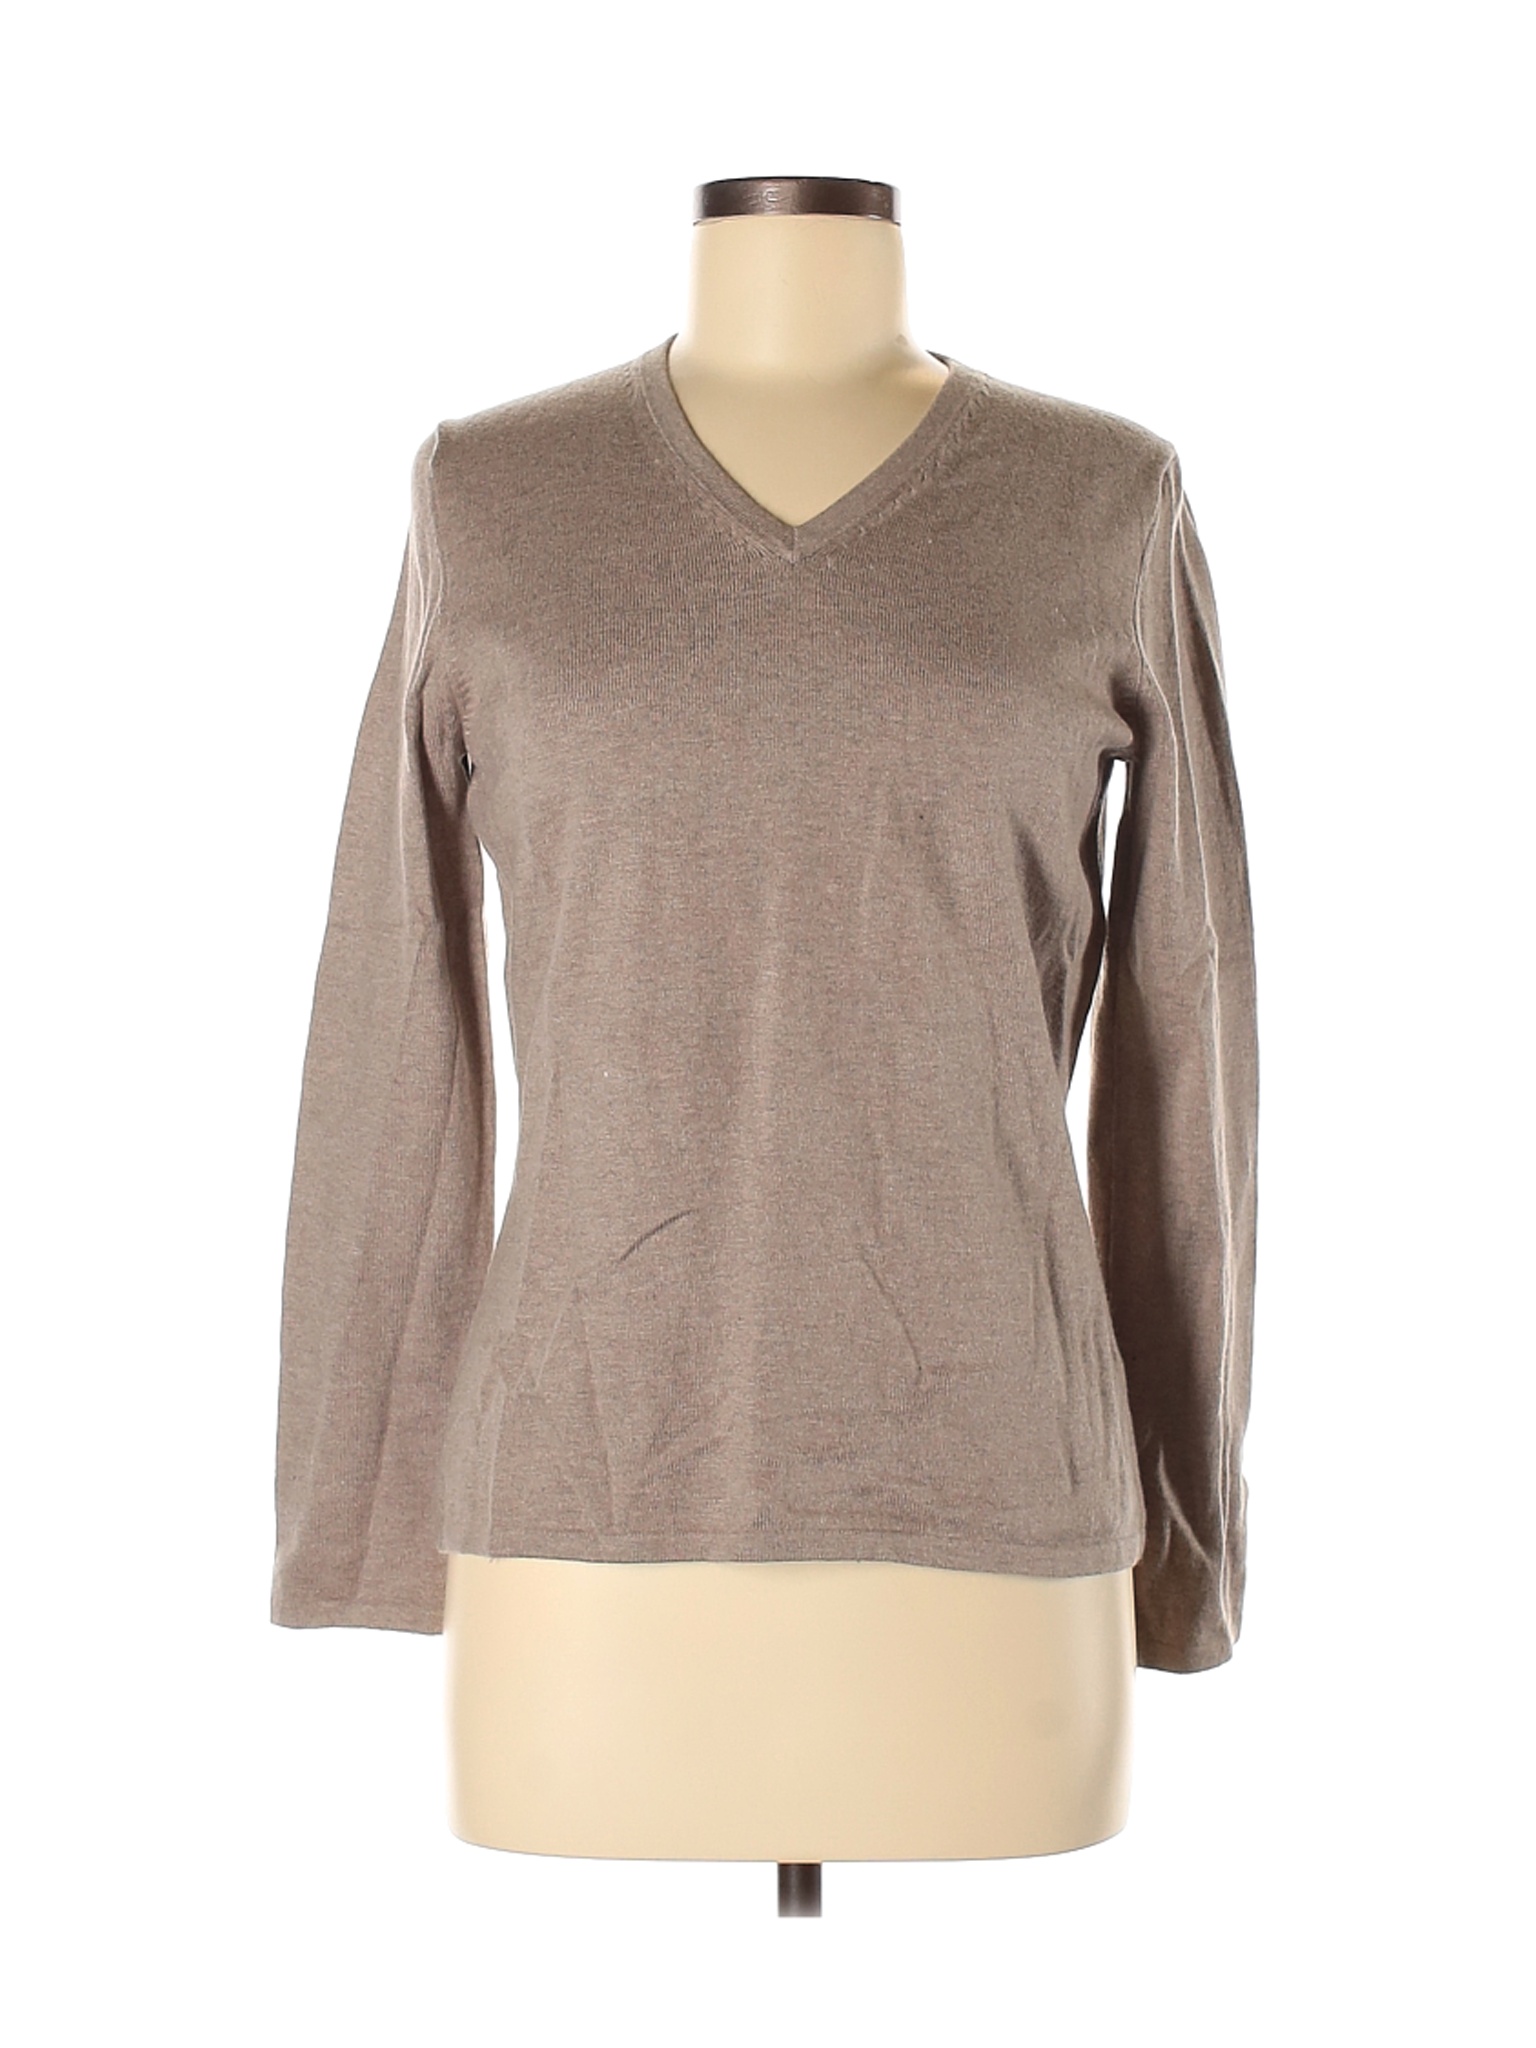 NWT Jillanova Women Brown Pullover Sweater M | eBay